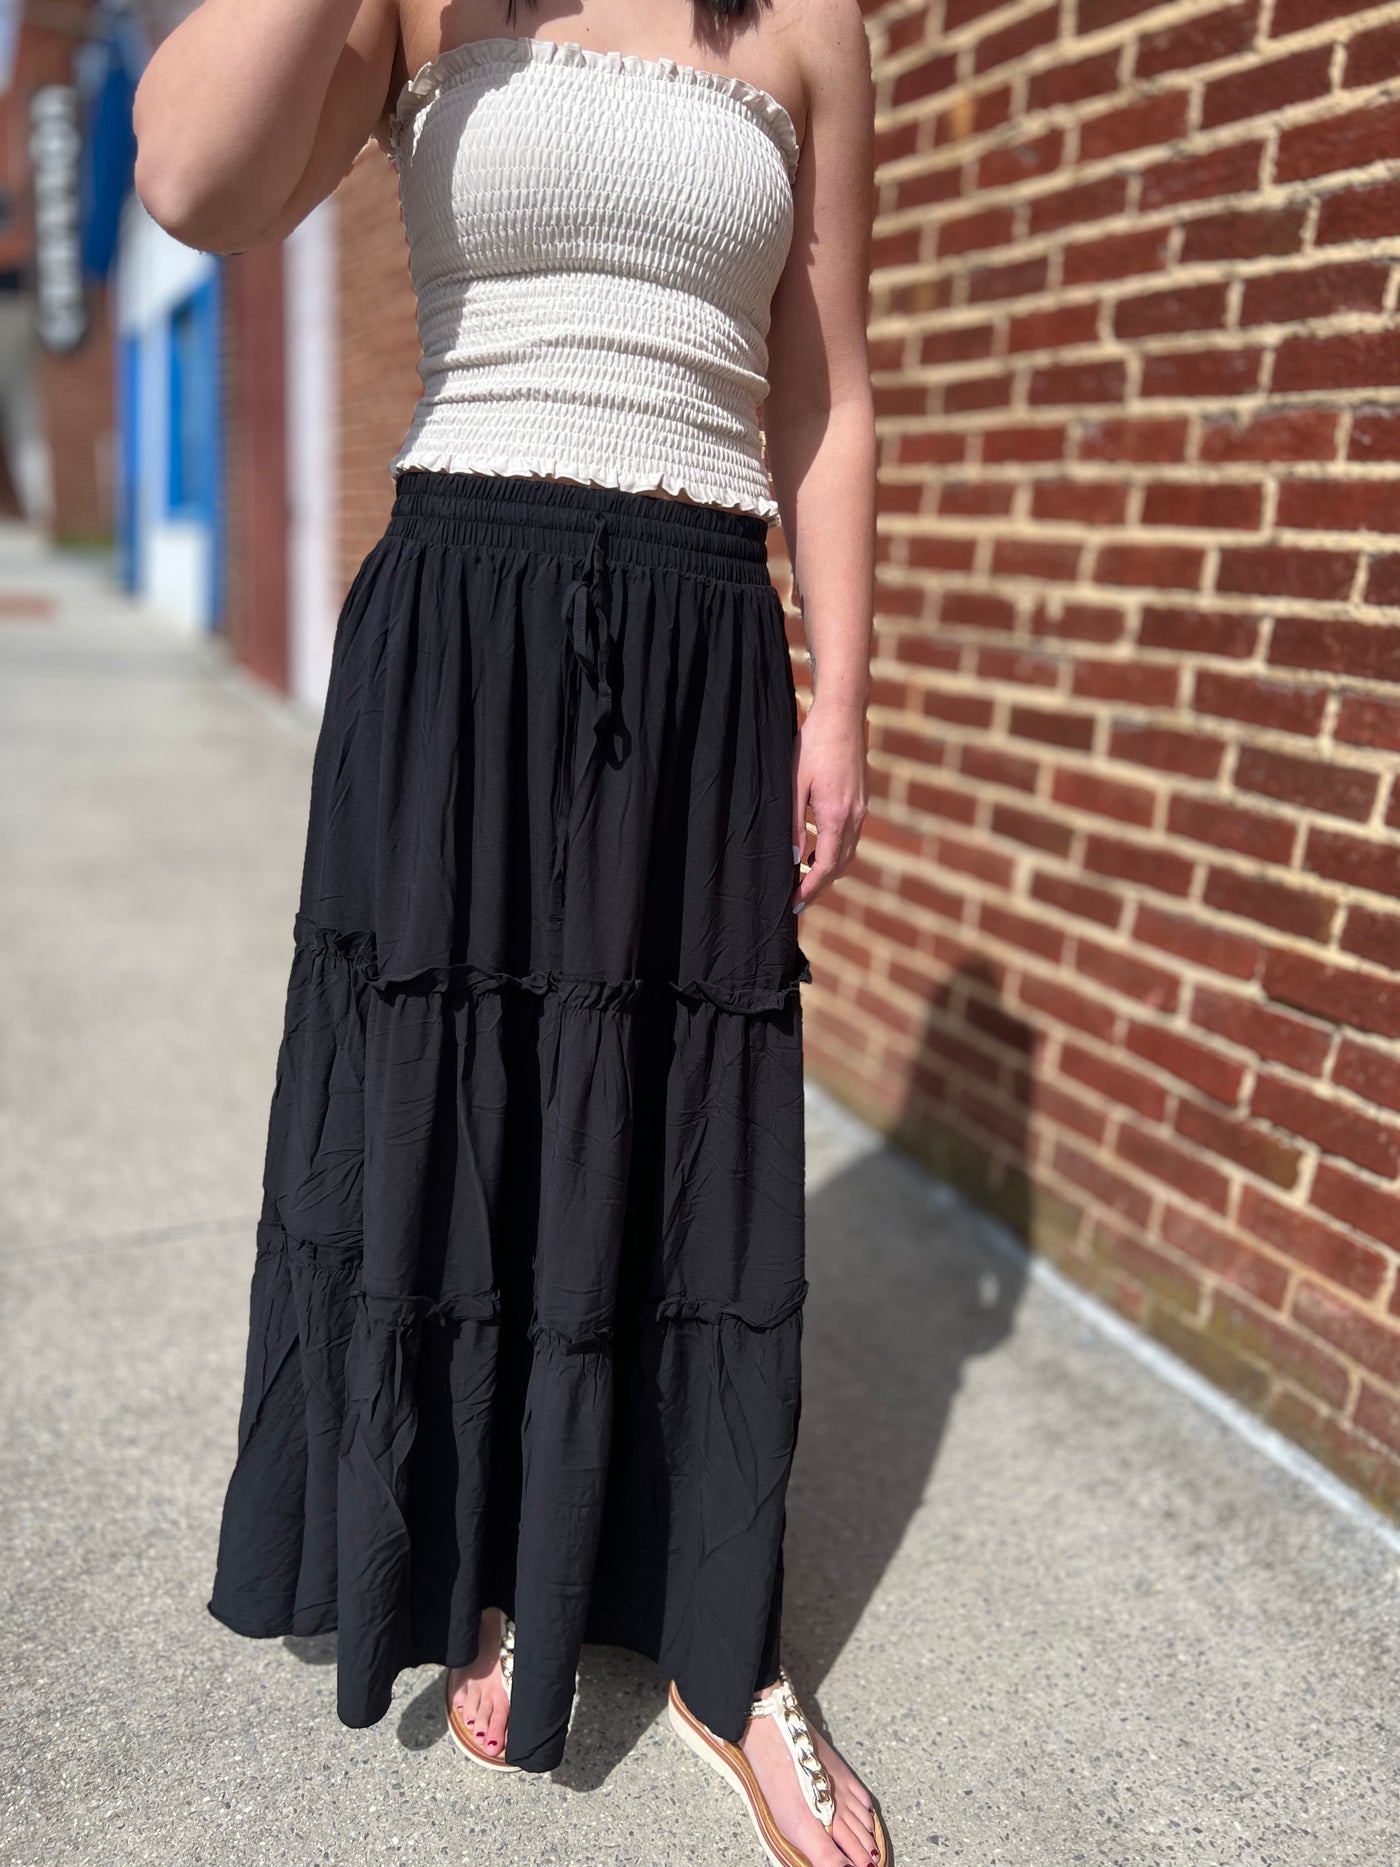 Black Drawstring Skirt - JustBelieve.Boutique